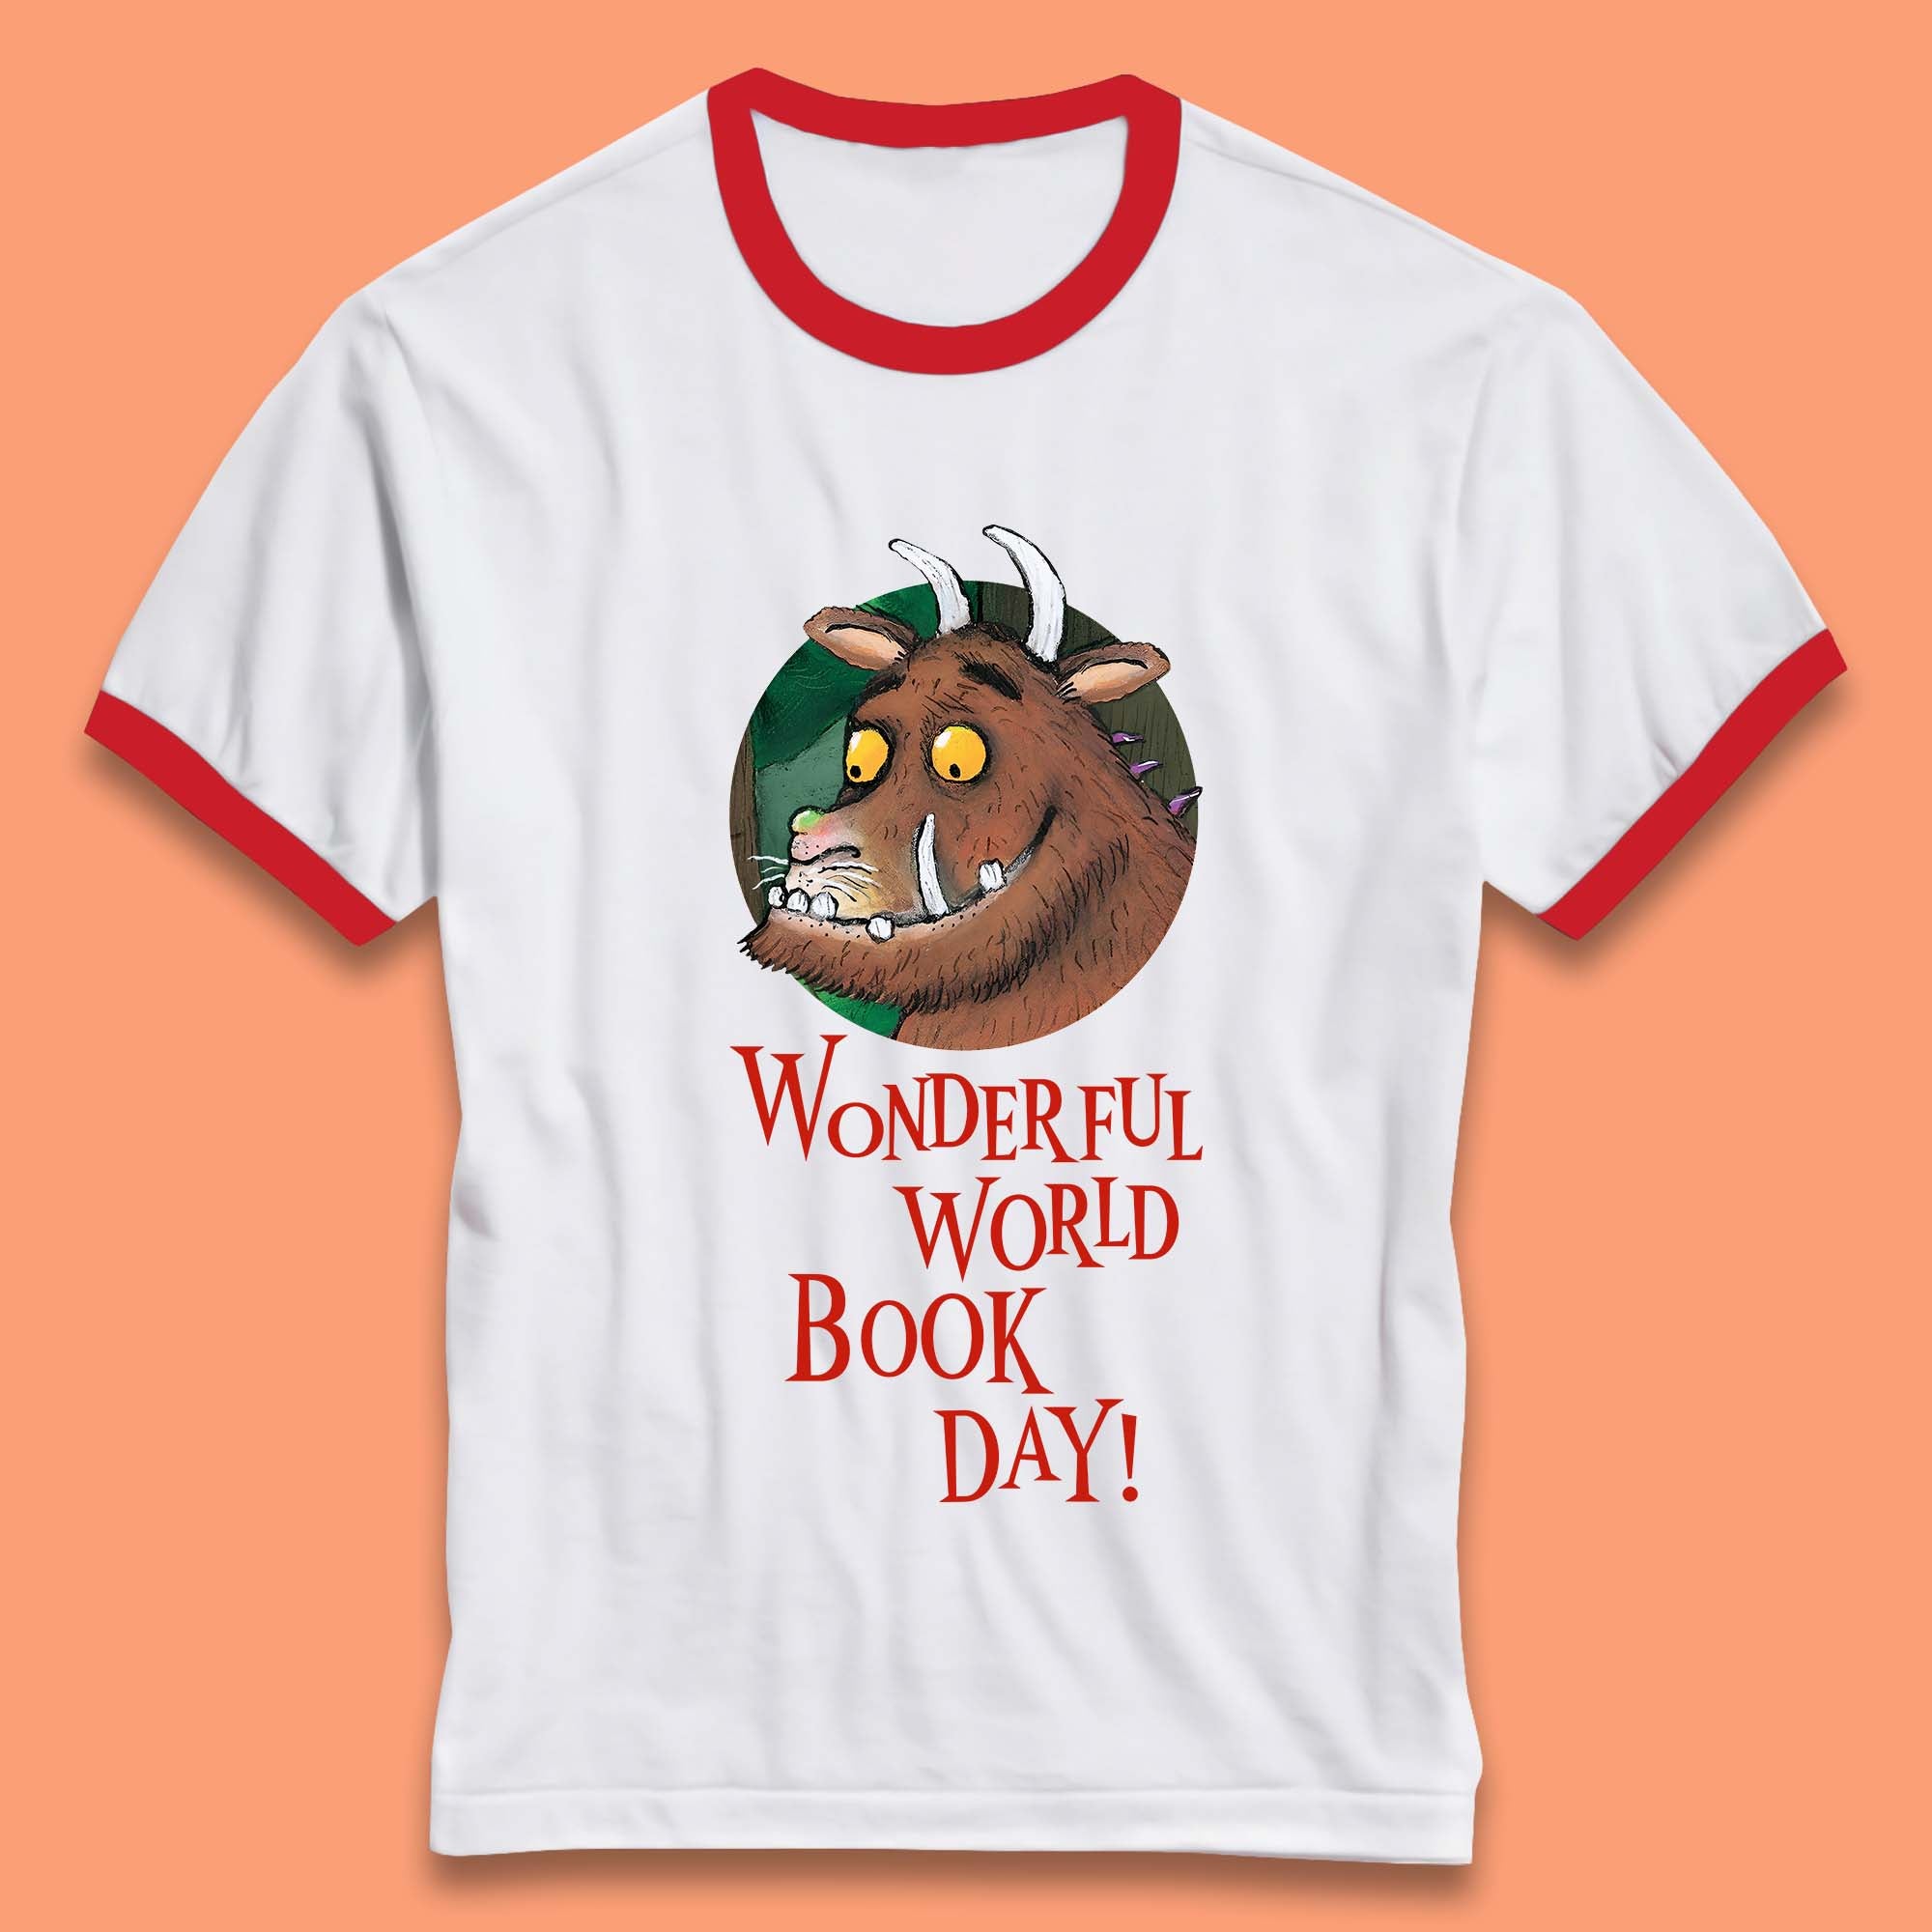 Wonderful World Book Day Ringer T-Shirt